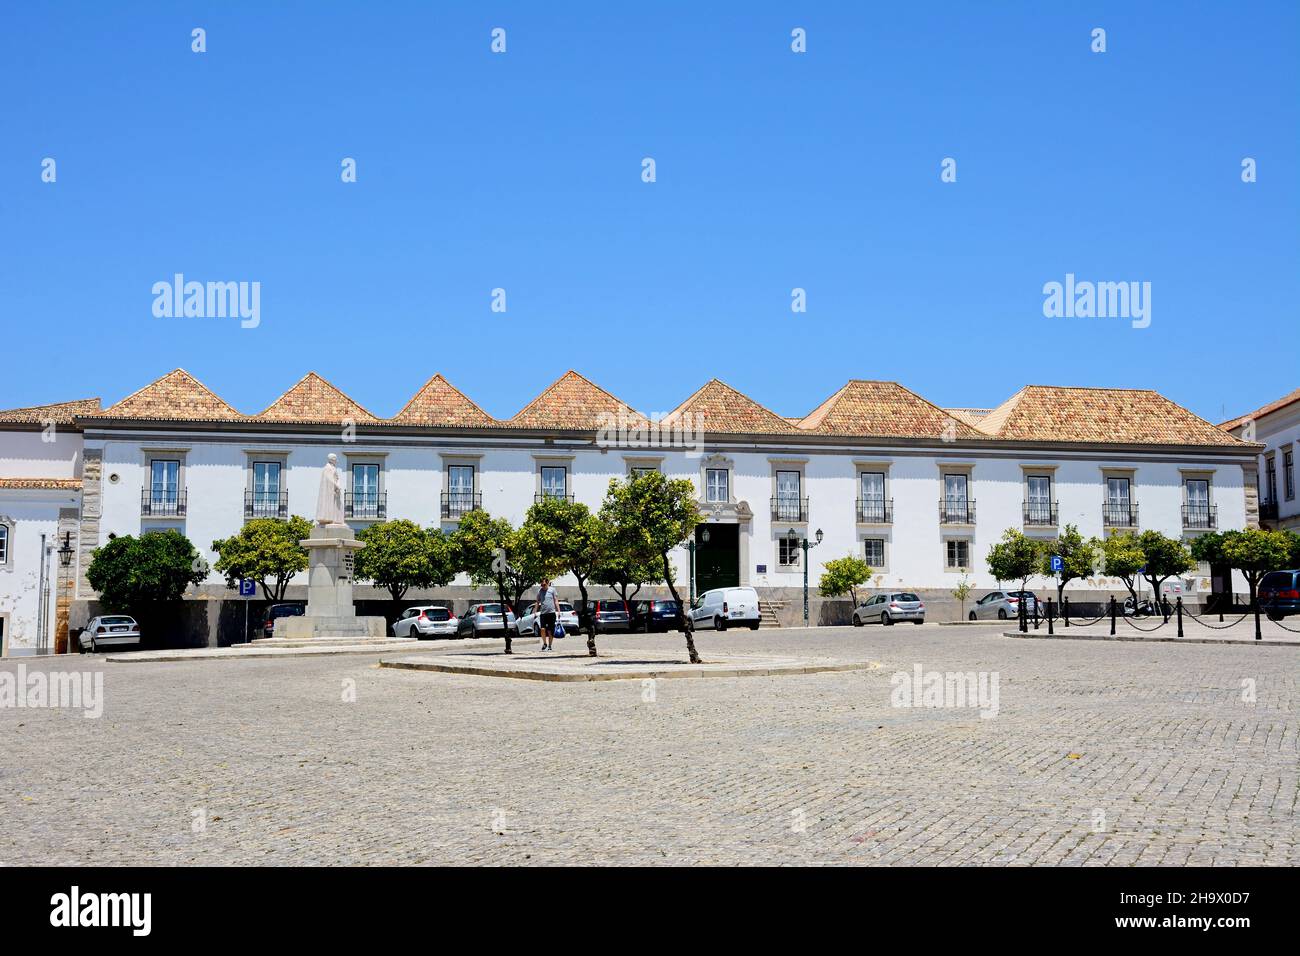 View of the buildings in the Praca Largo de Se in the city centre, Faro, Algarve, Portugal, Europe. Stock Photo